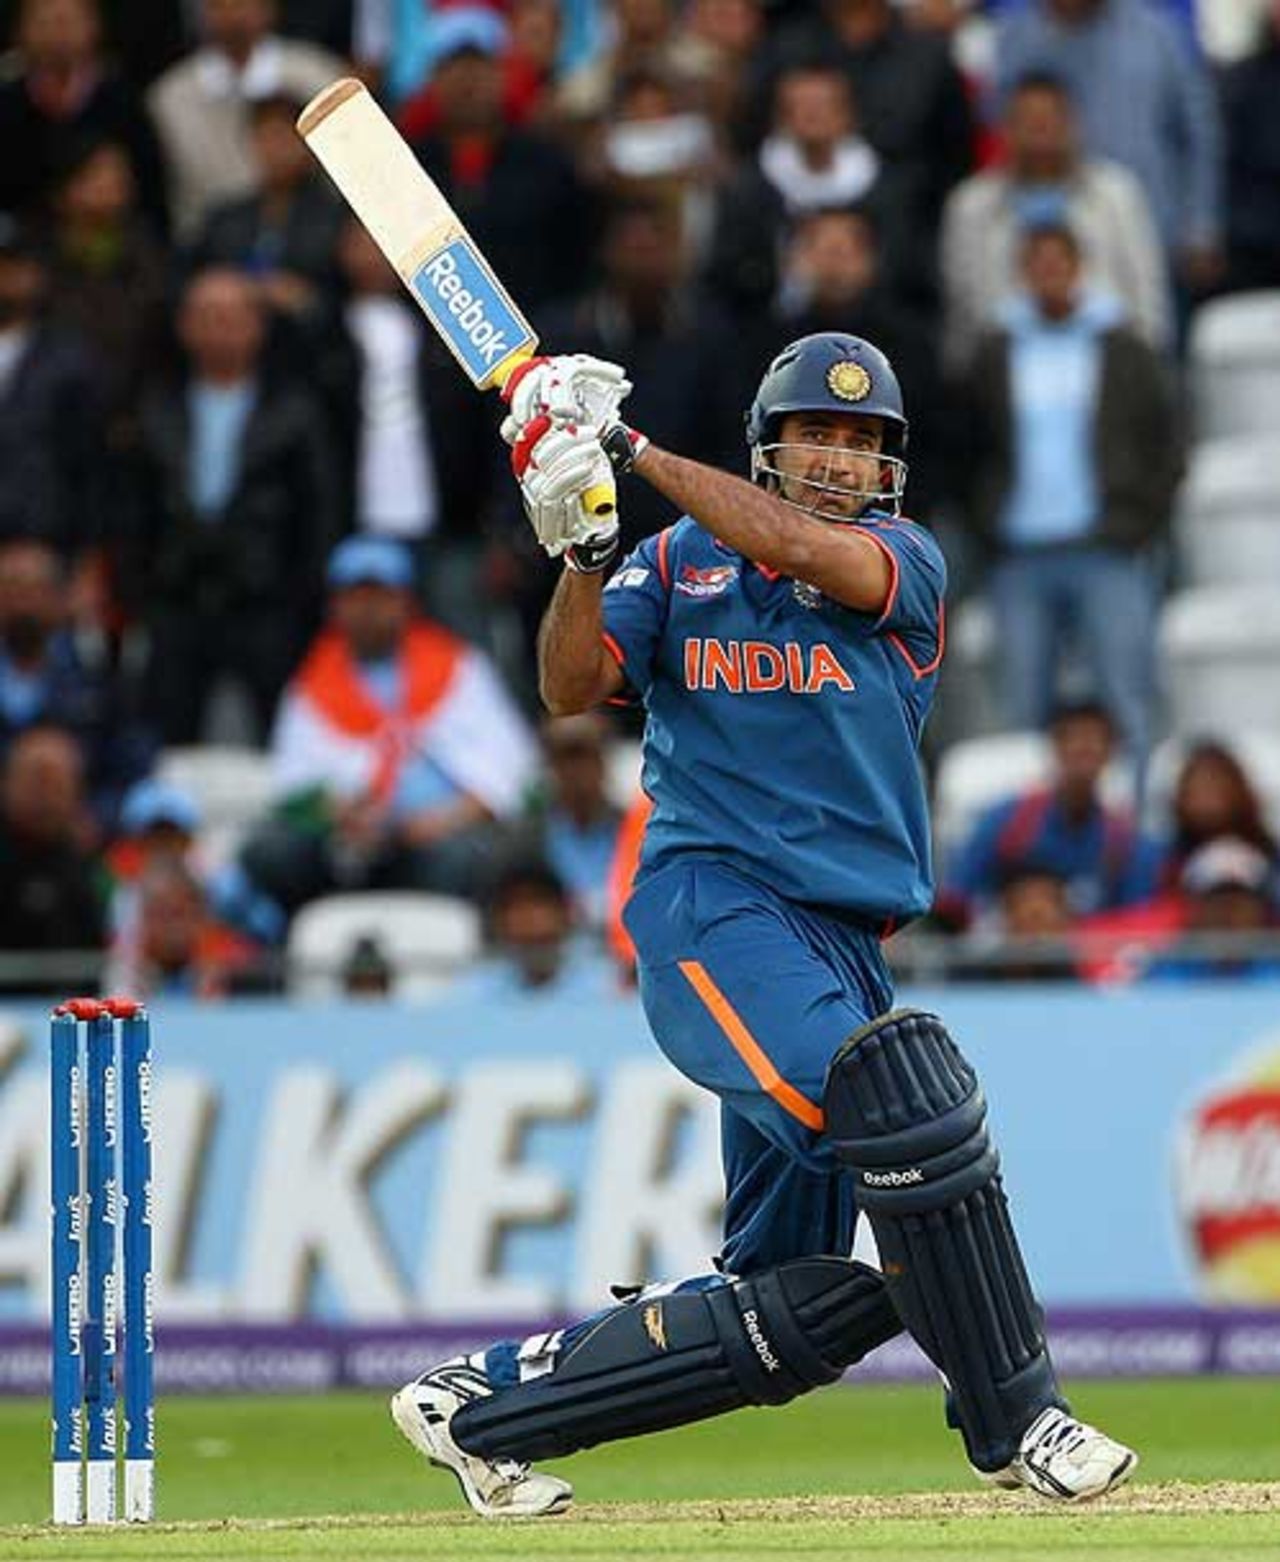 Irfan Pathan's last-over cameo helped India, Bangladesh v India, ICC World Twenty20, Trent Bridge, June 6, 2009